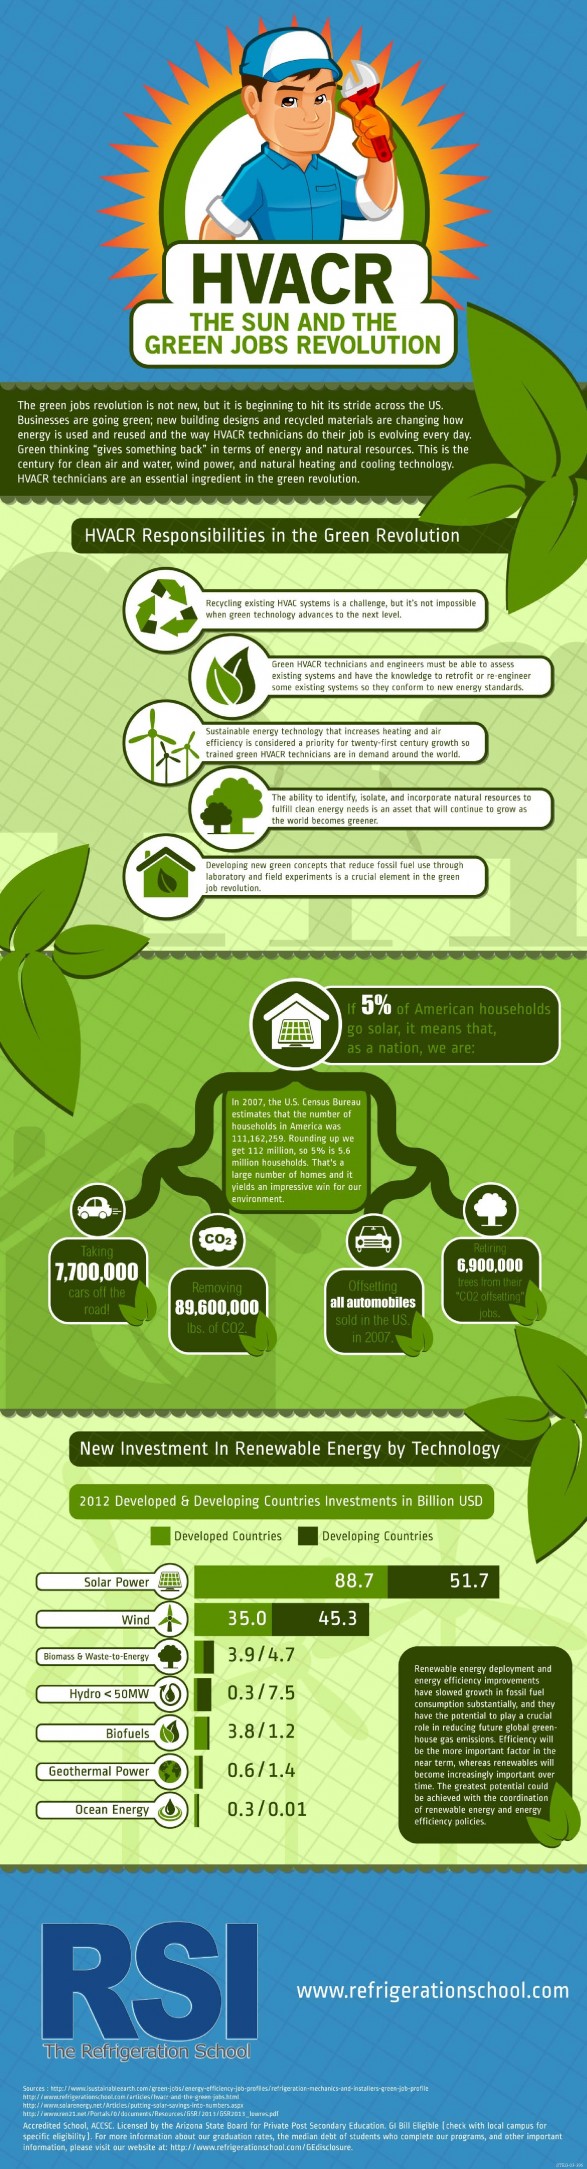 HVACR Green Jobs Statistics